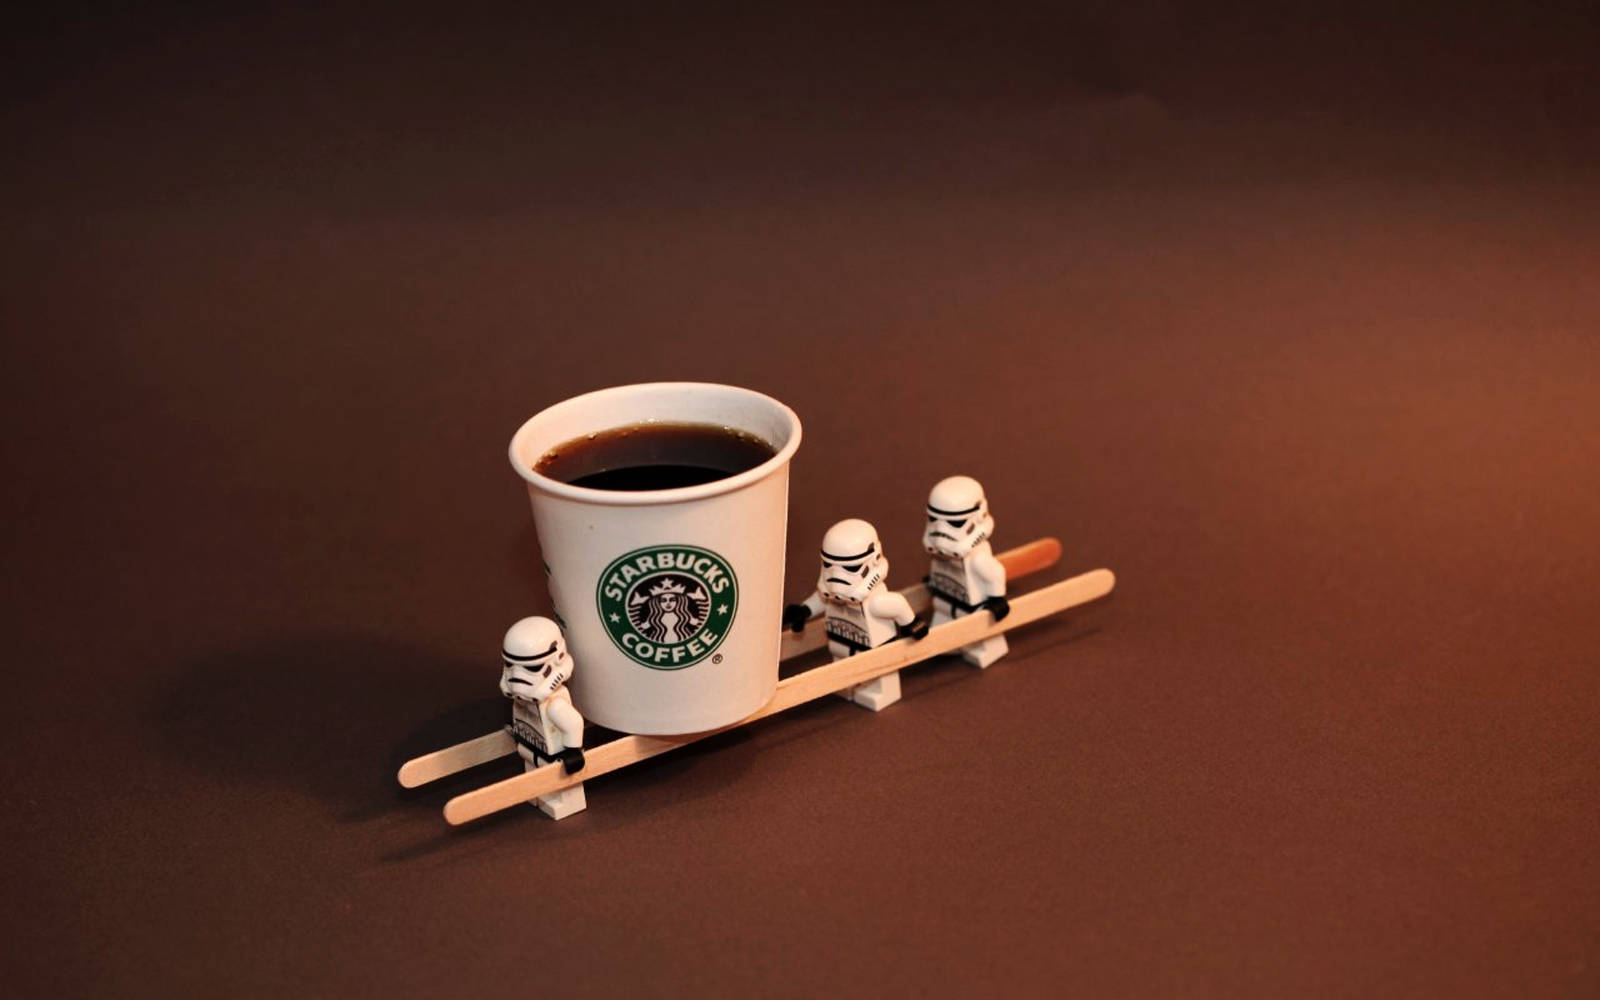 4k Lego Starbucks Coffee Wallpaper